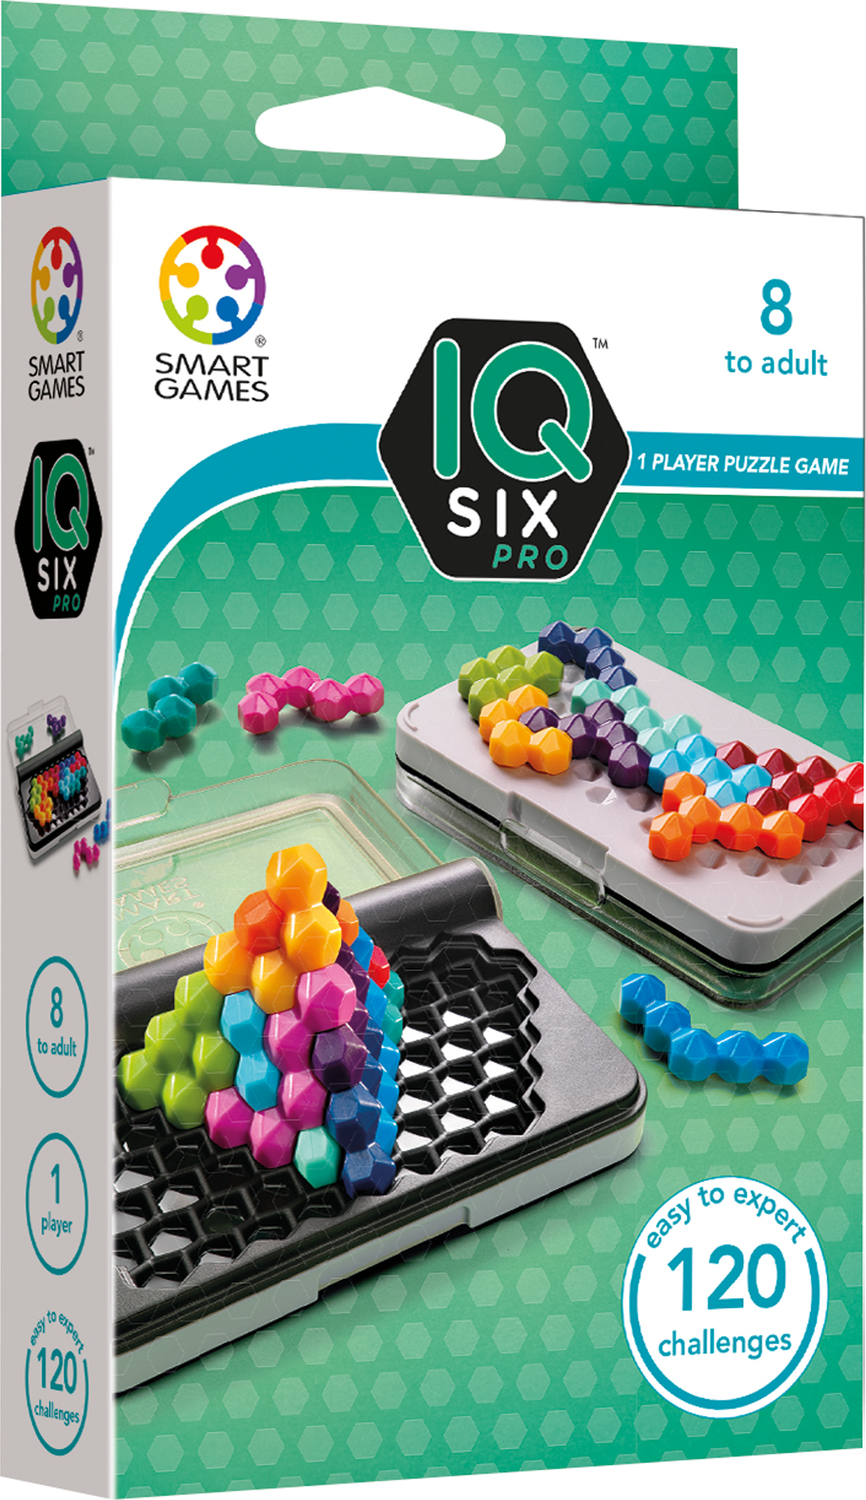 SmartGames IQ Six Pro - Imagine That Toys